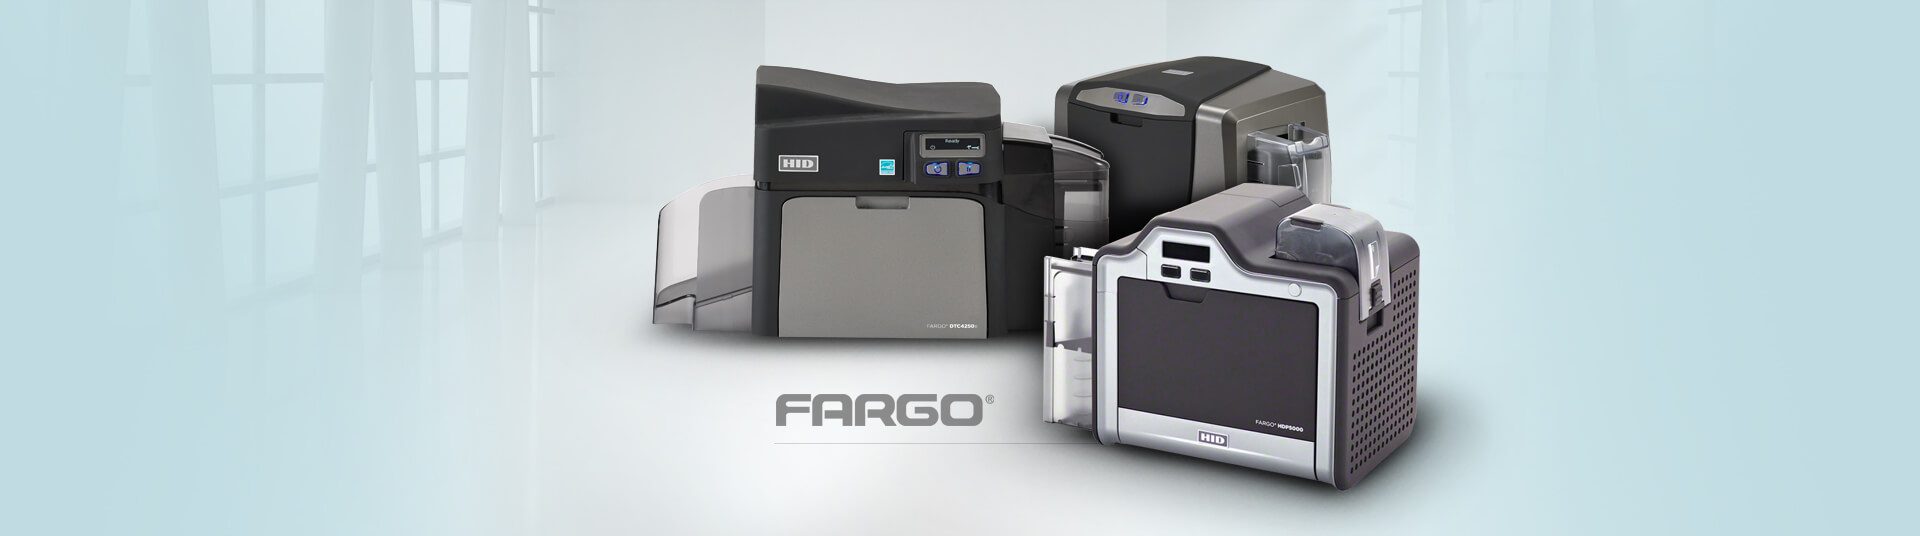 Fargo Plastic Card Printer